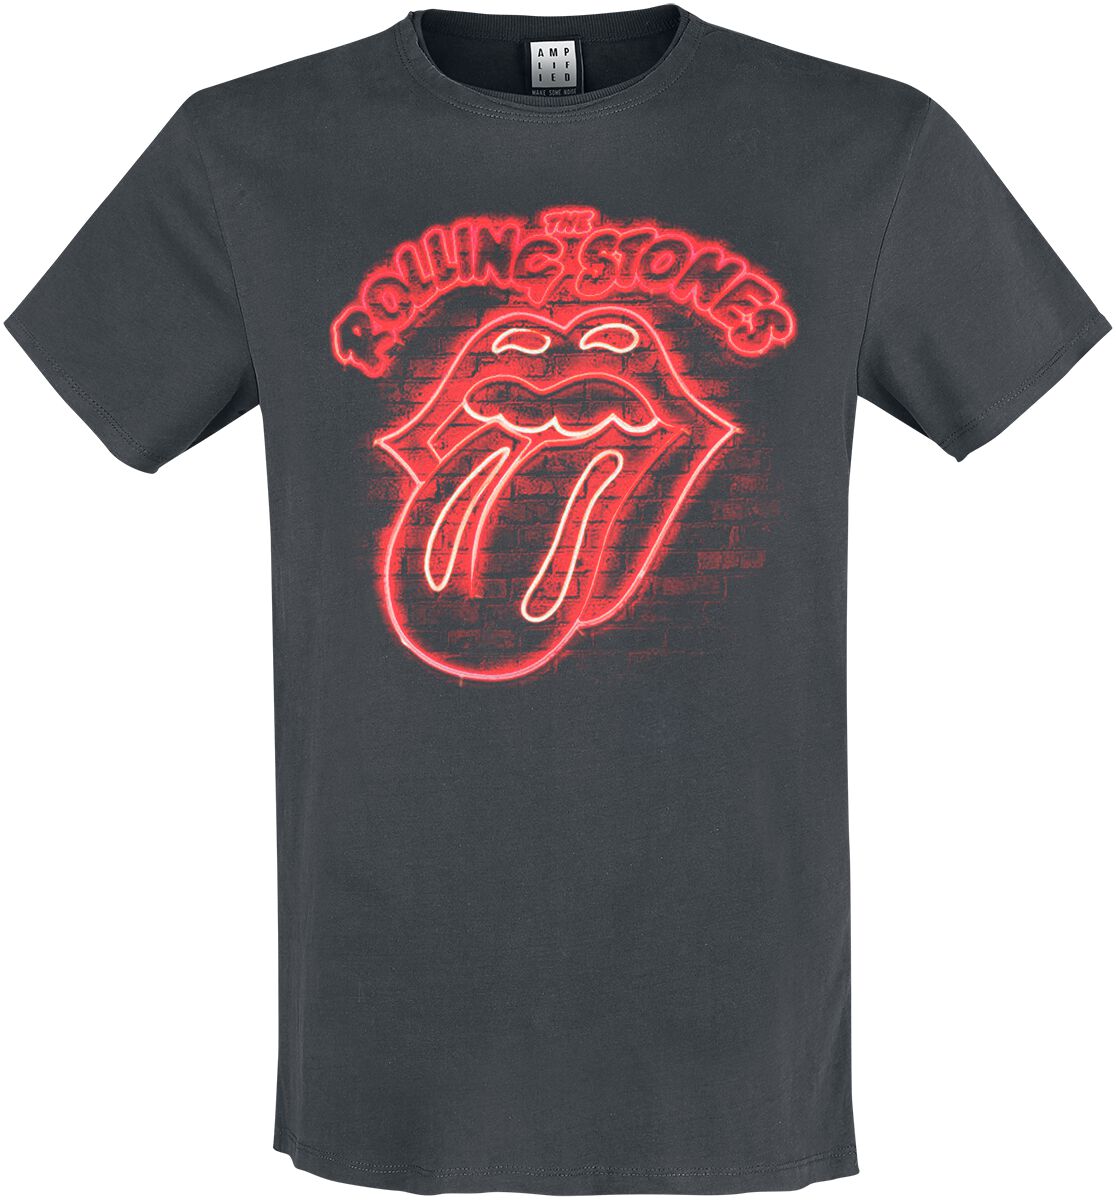 The Rolling Stones T-Shirt - Amplified Collection - Neon Light - S bis XL - für Männer - Größe S - charcoal  - Lizenziertes Merchandise!